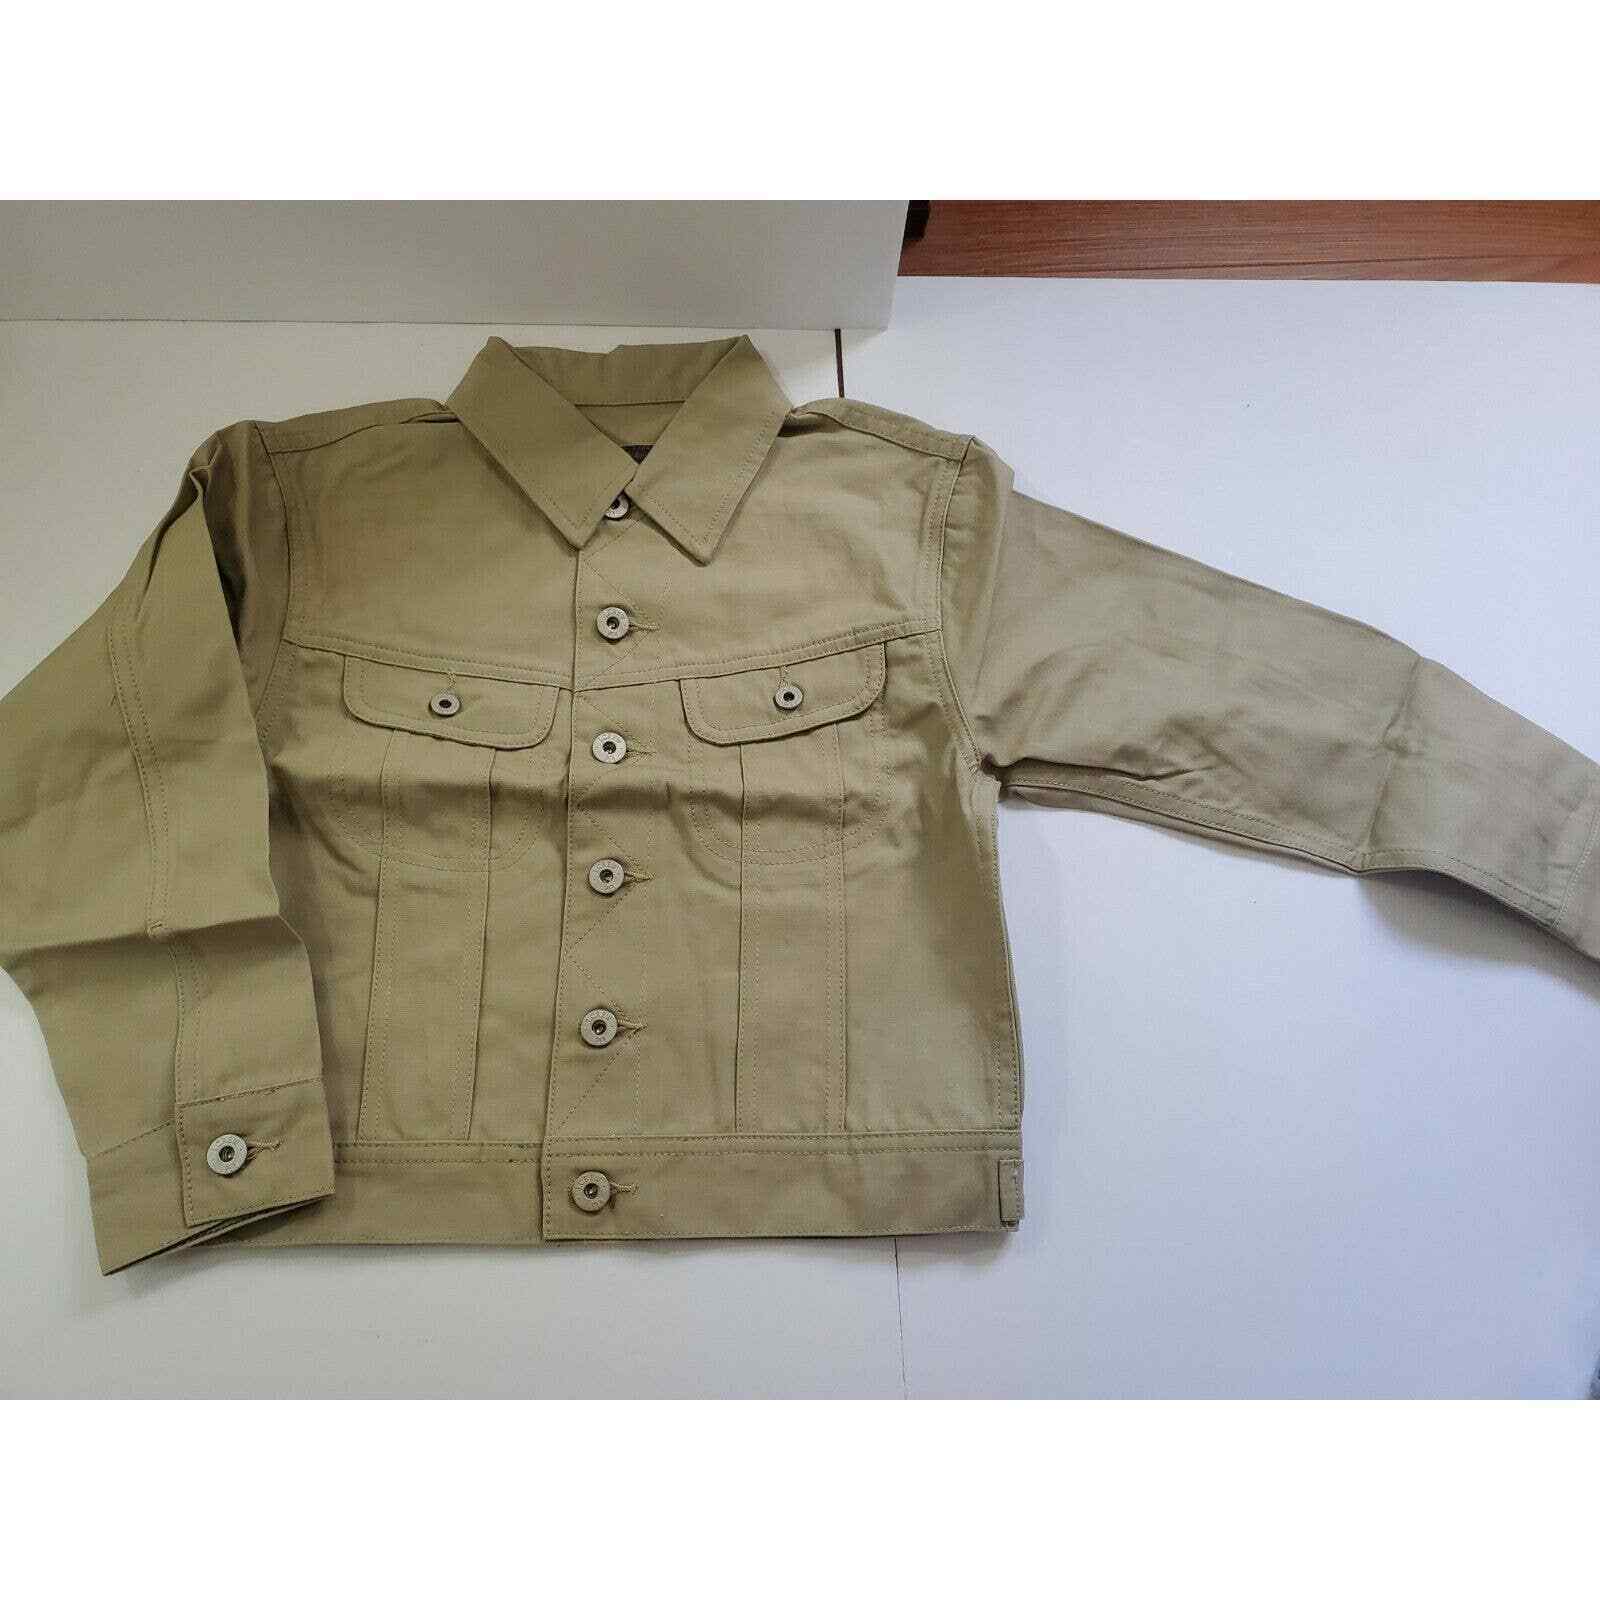 Primary image for j crew kid boys jean jacket Size Small New Khaki vtg Vintage